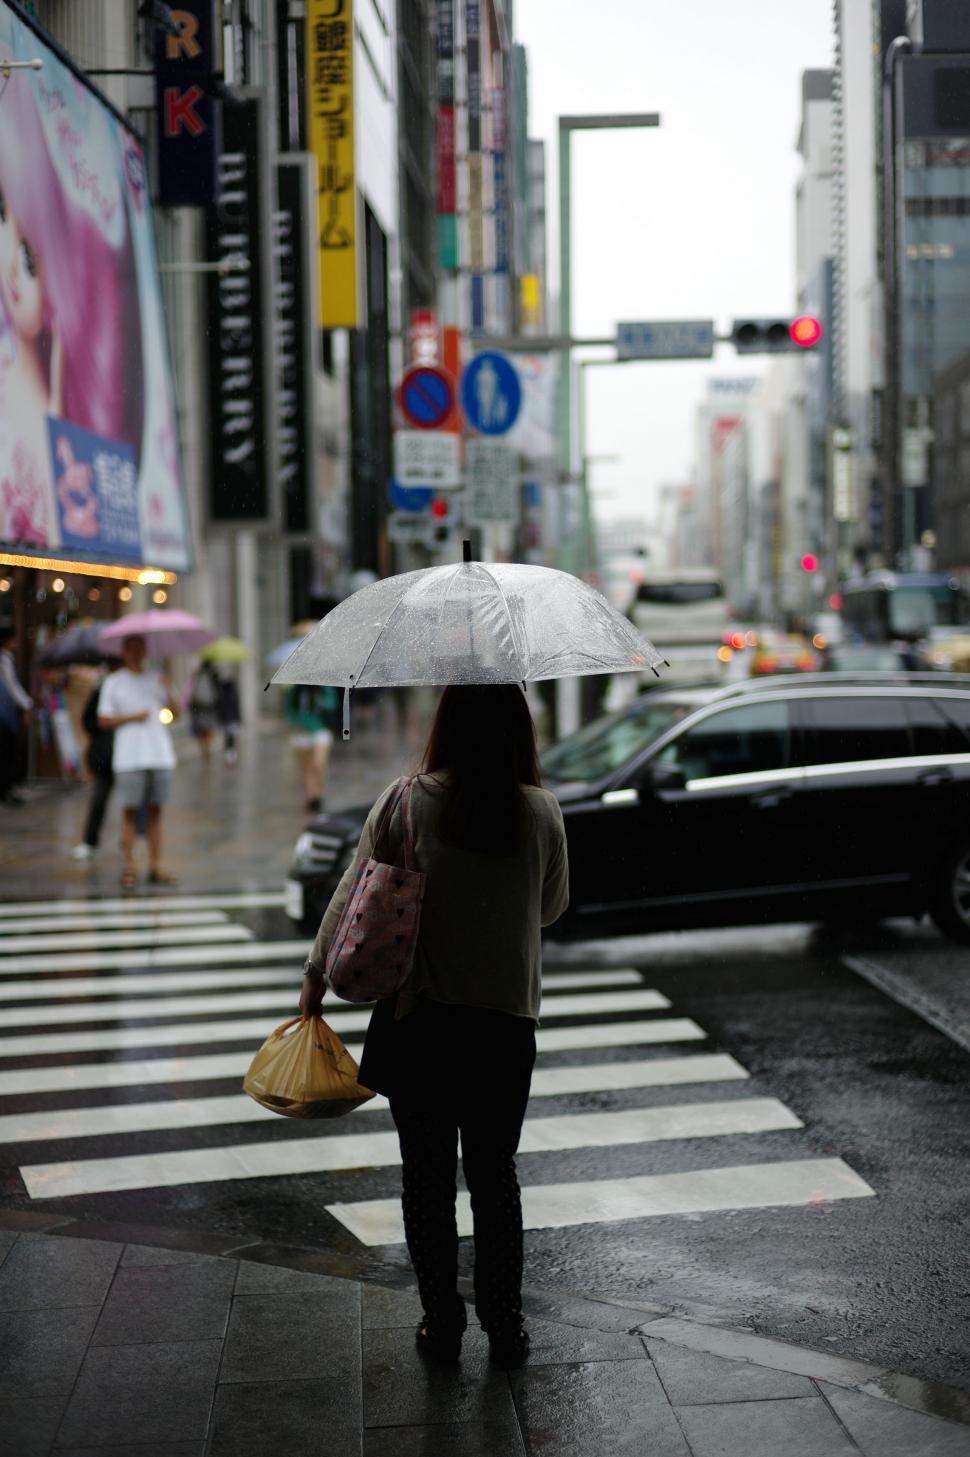 Free Image of Woman Walking Across Street Holding Umbrella 